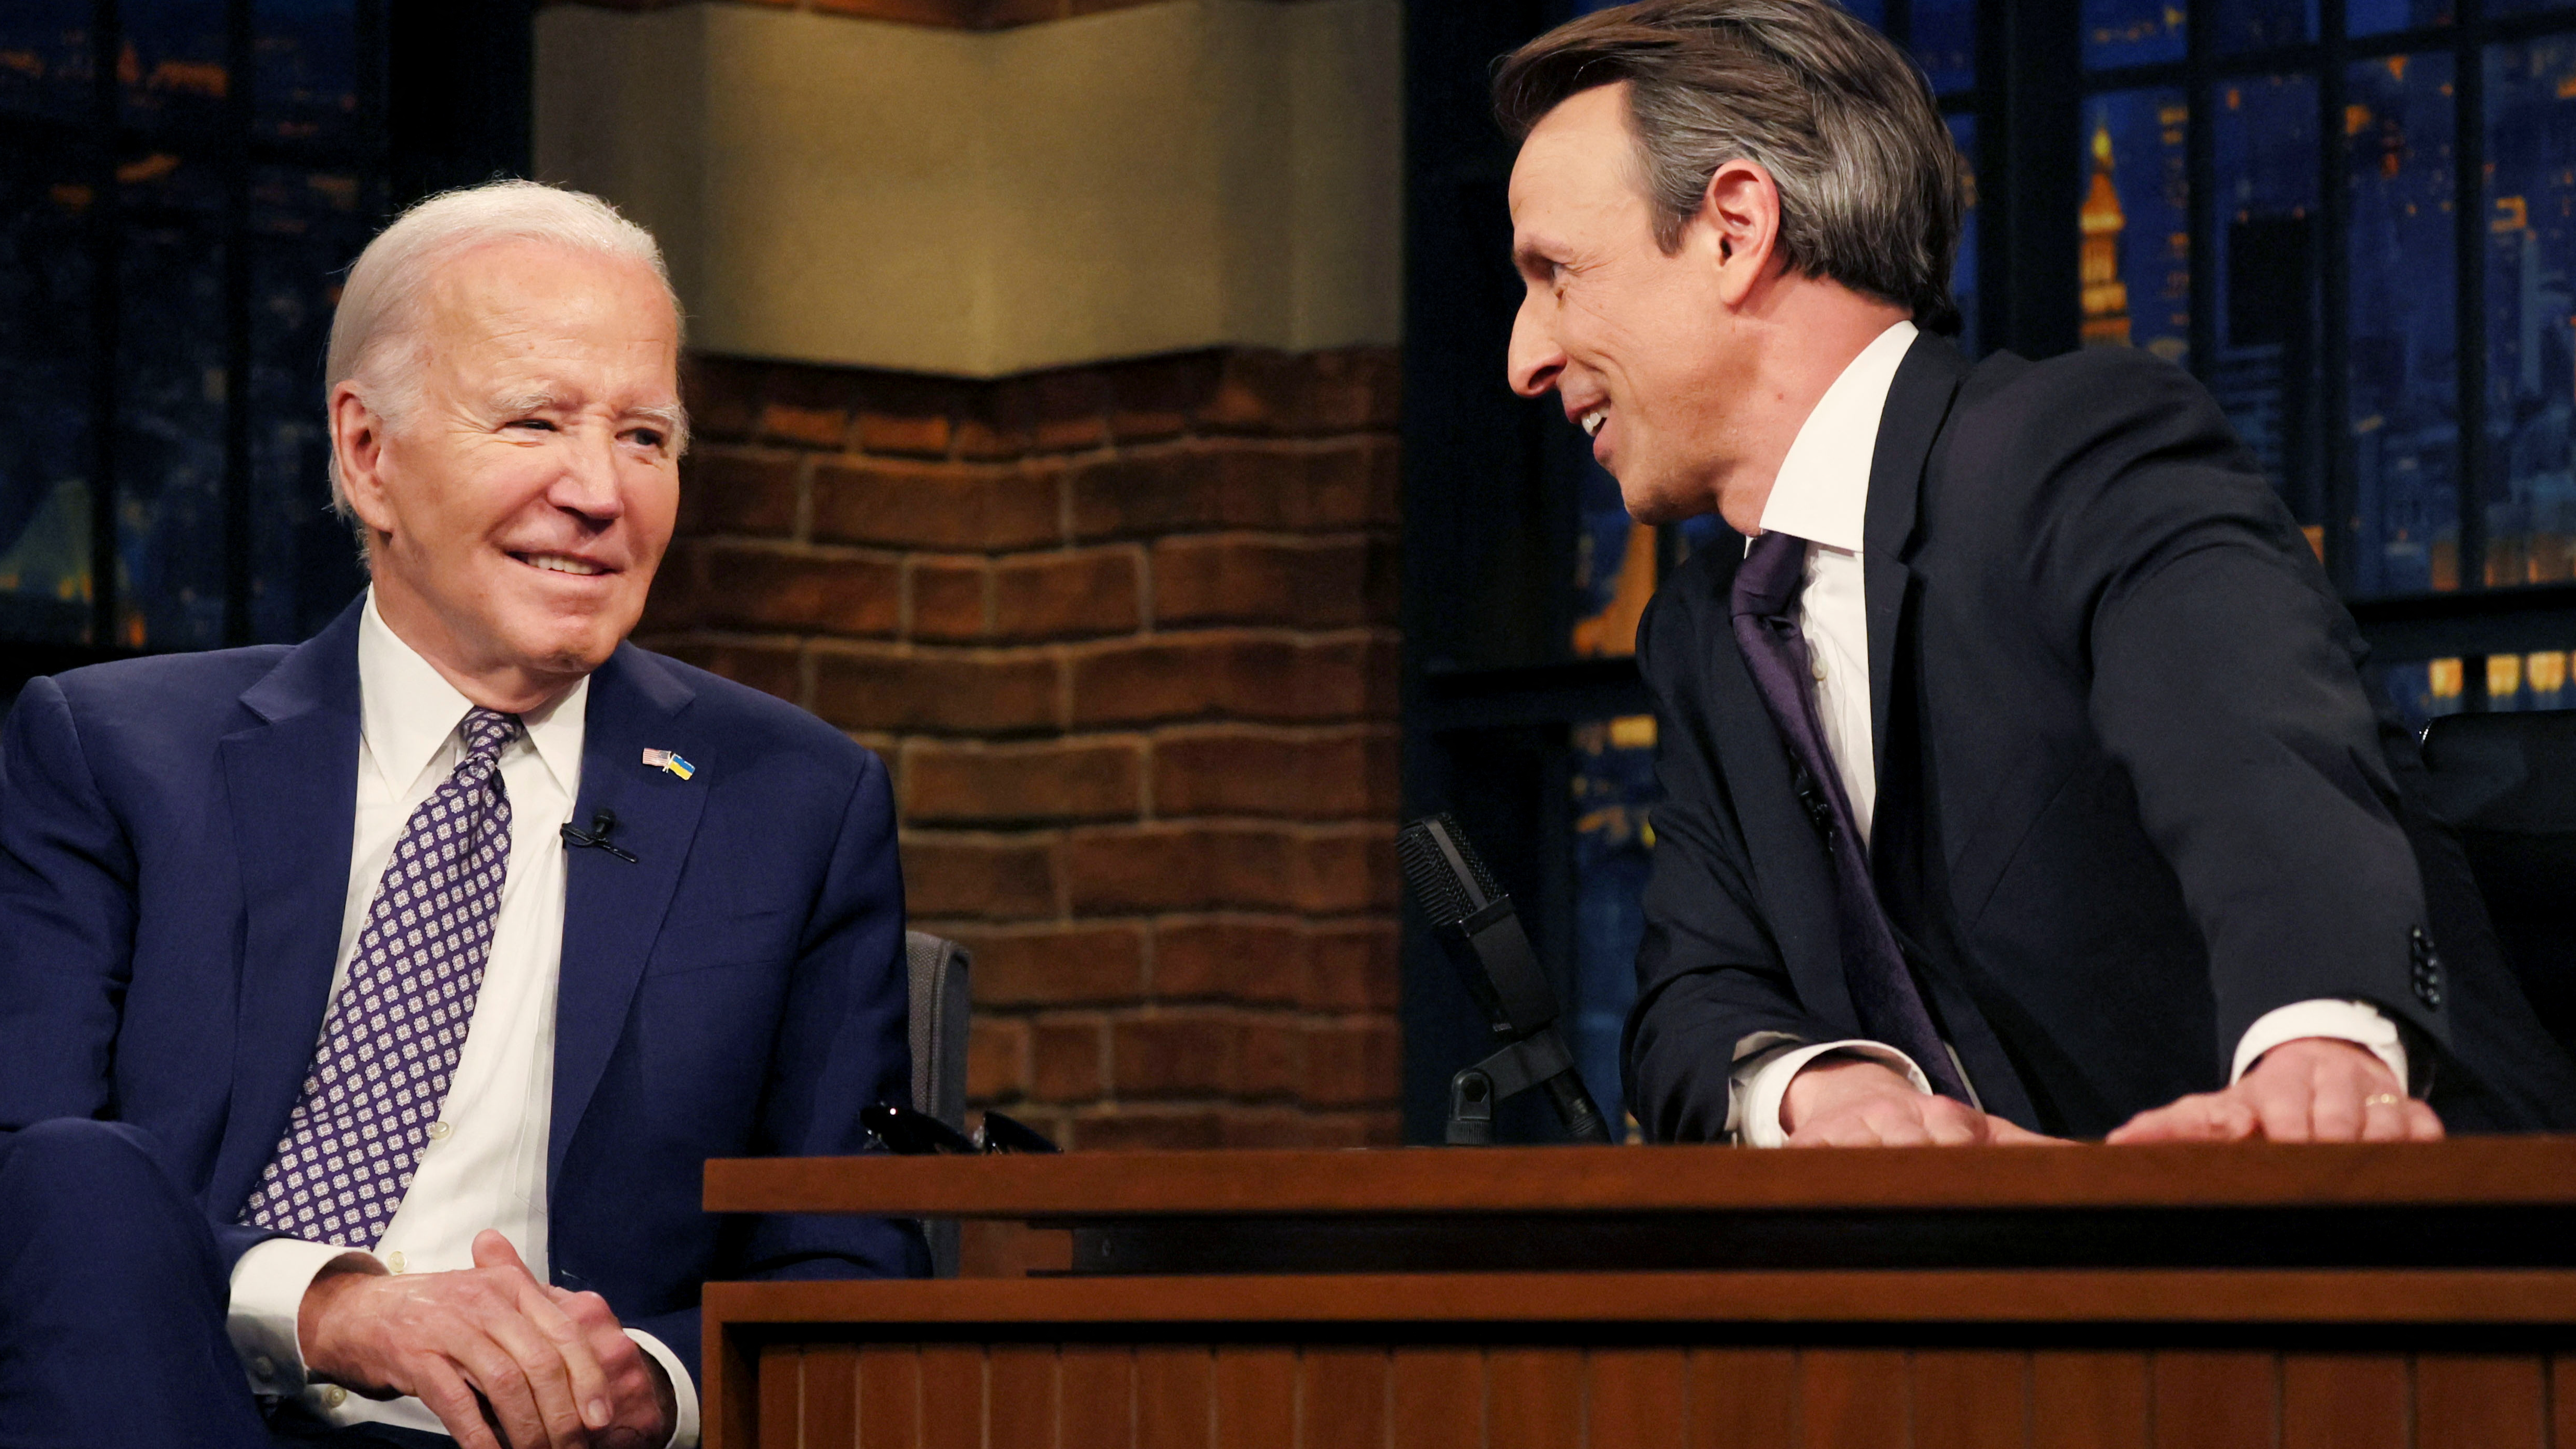 U.S. President Joe Biden laughs during his NBC TV interview. /Leah Millis/Reuters